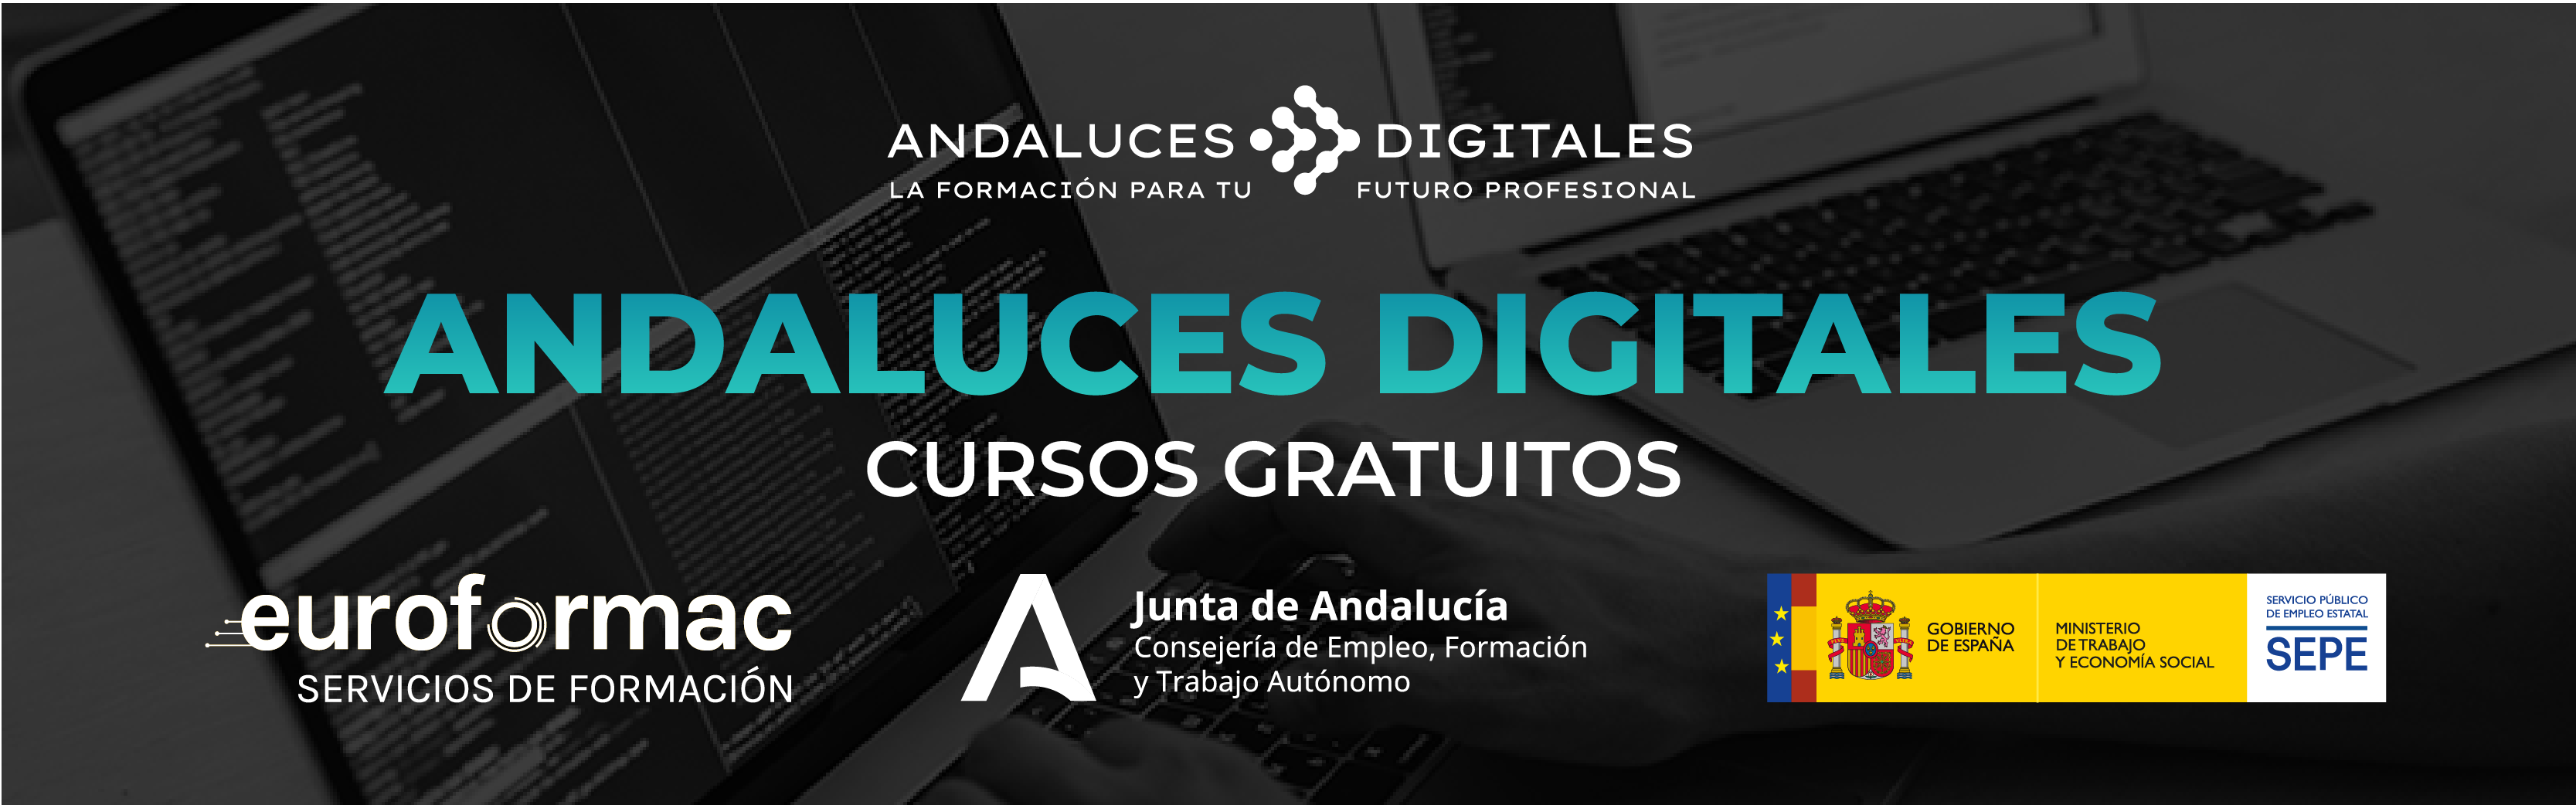 Cursos gratuitos Andaluces Digitales